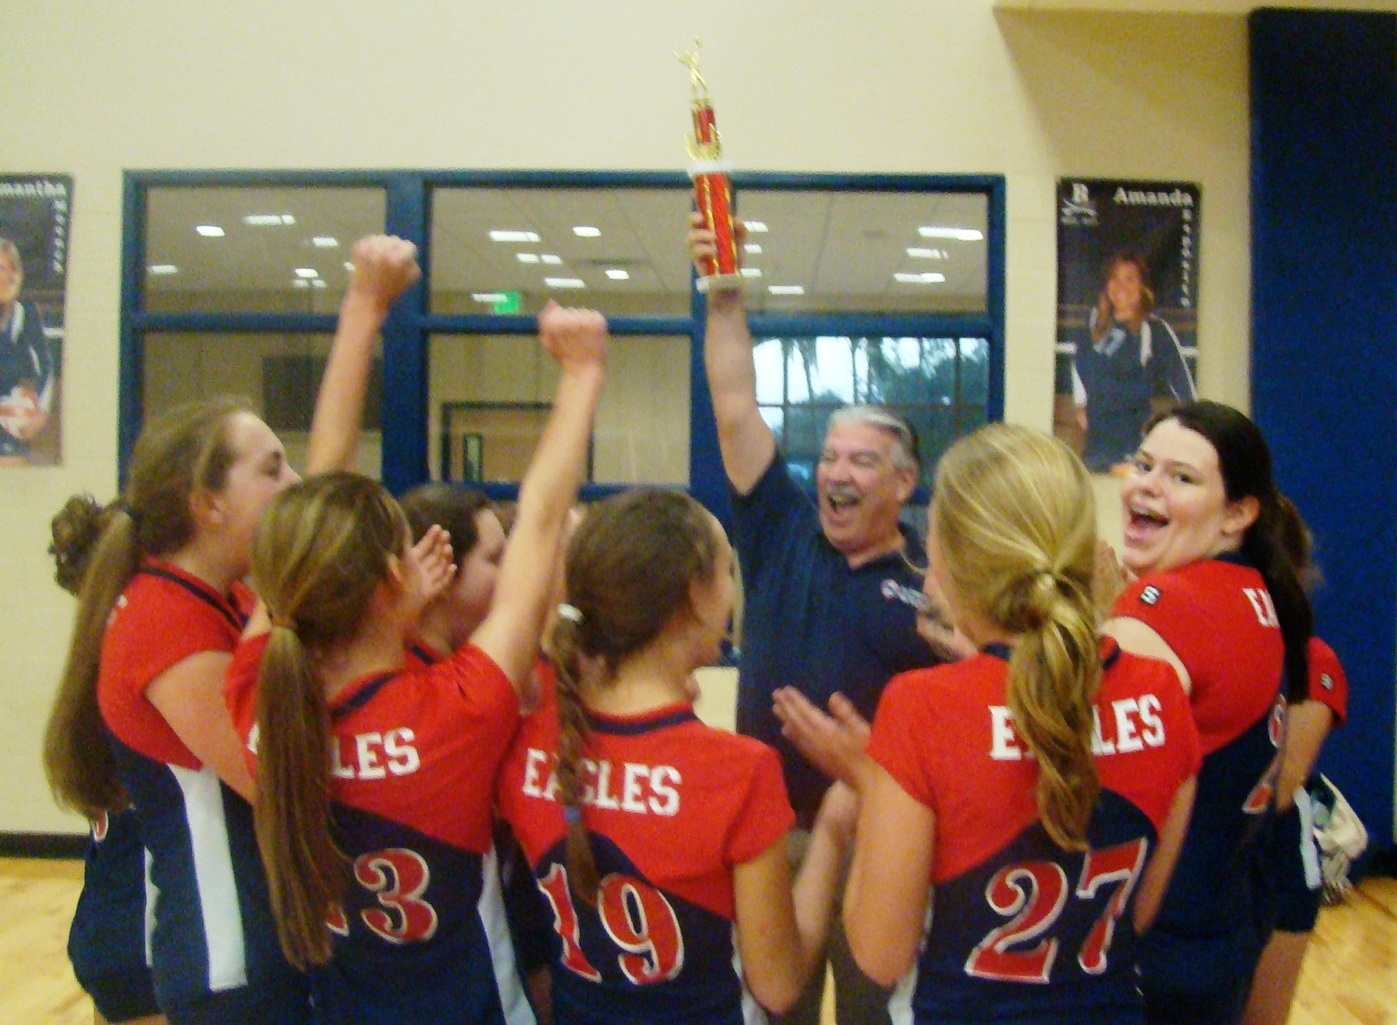 St. John's Girls' Volleyball Team Wins League Championship